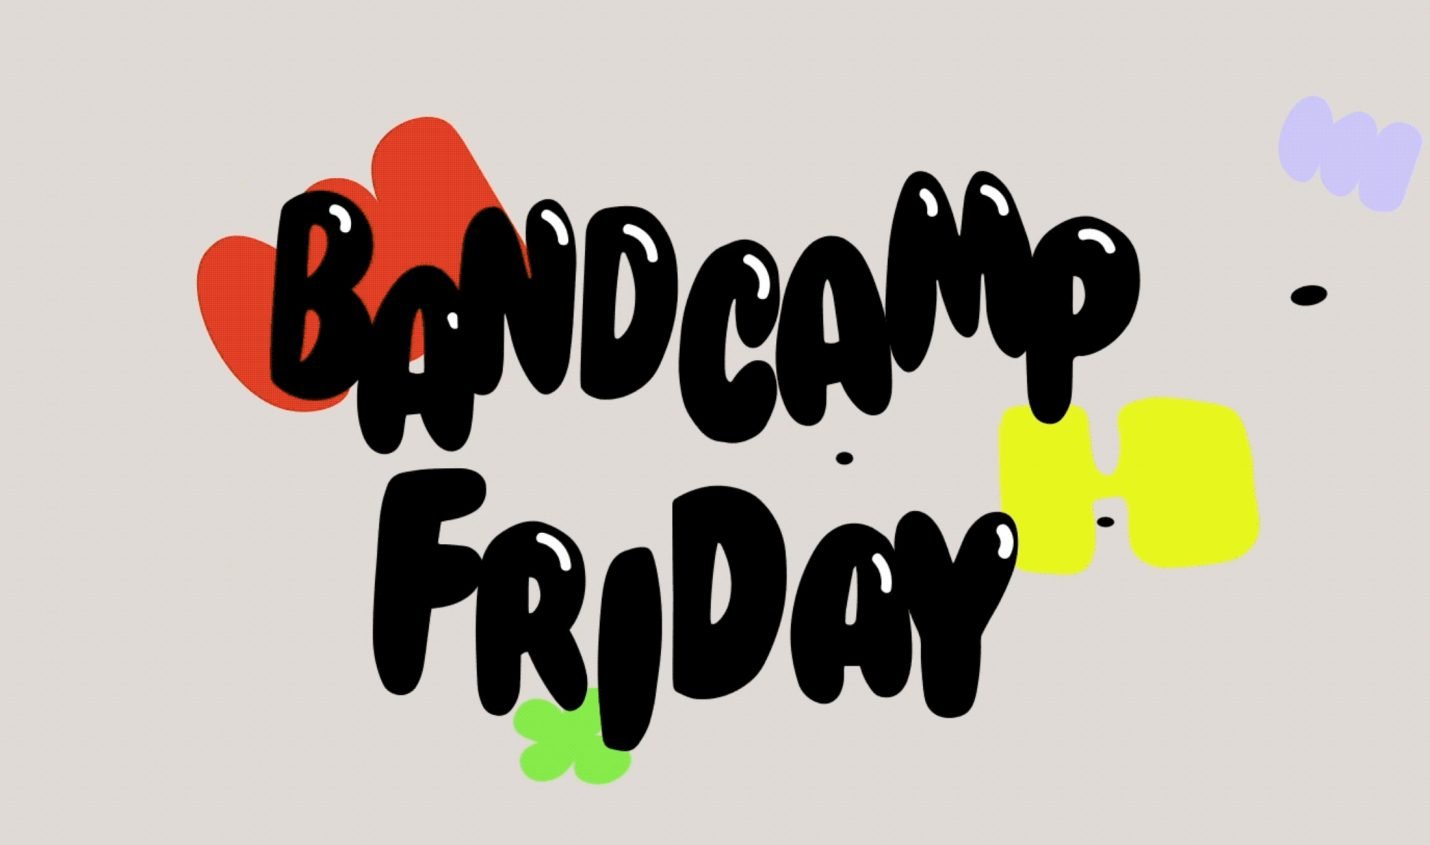 Bandcamp Friday Aktion wird bis Ende 2020 verlängert